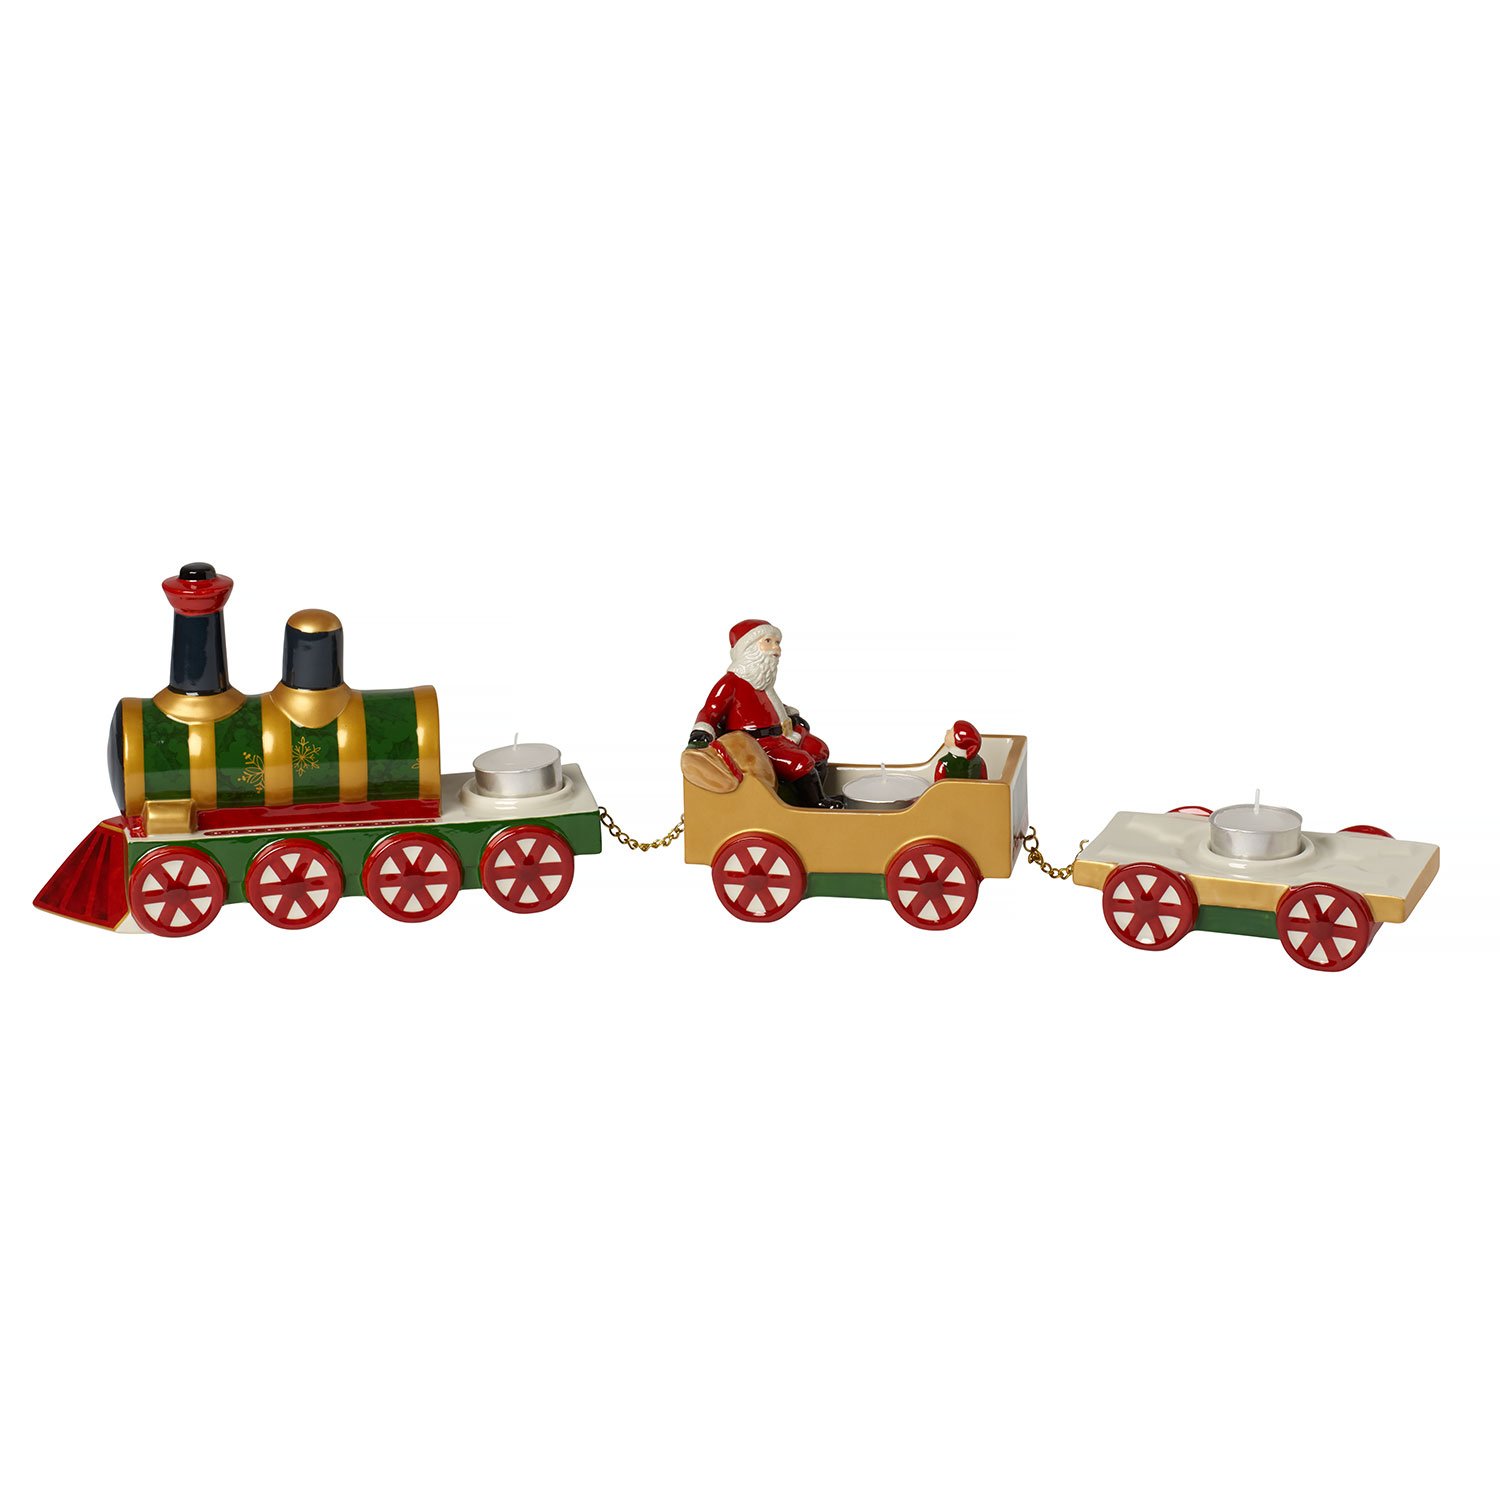 Christmas Toys Memory Фигурка " Северный экспресс" 55 см Villeroy & Boch
https://spb.v-b.ru
г.Санкт-Петербург
eshop@v-b.spb.ru
+7(812)3801977